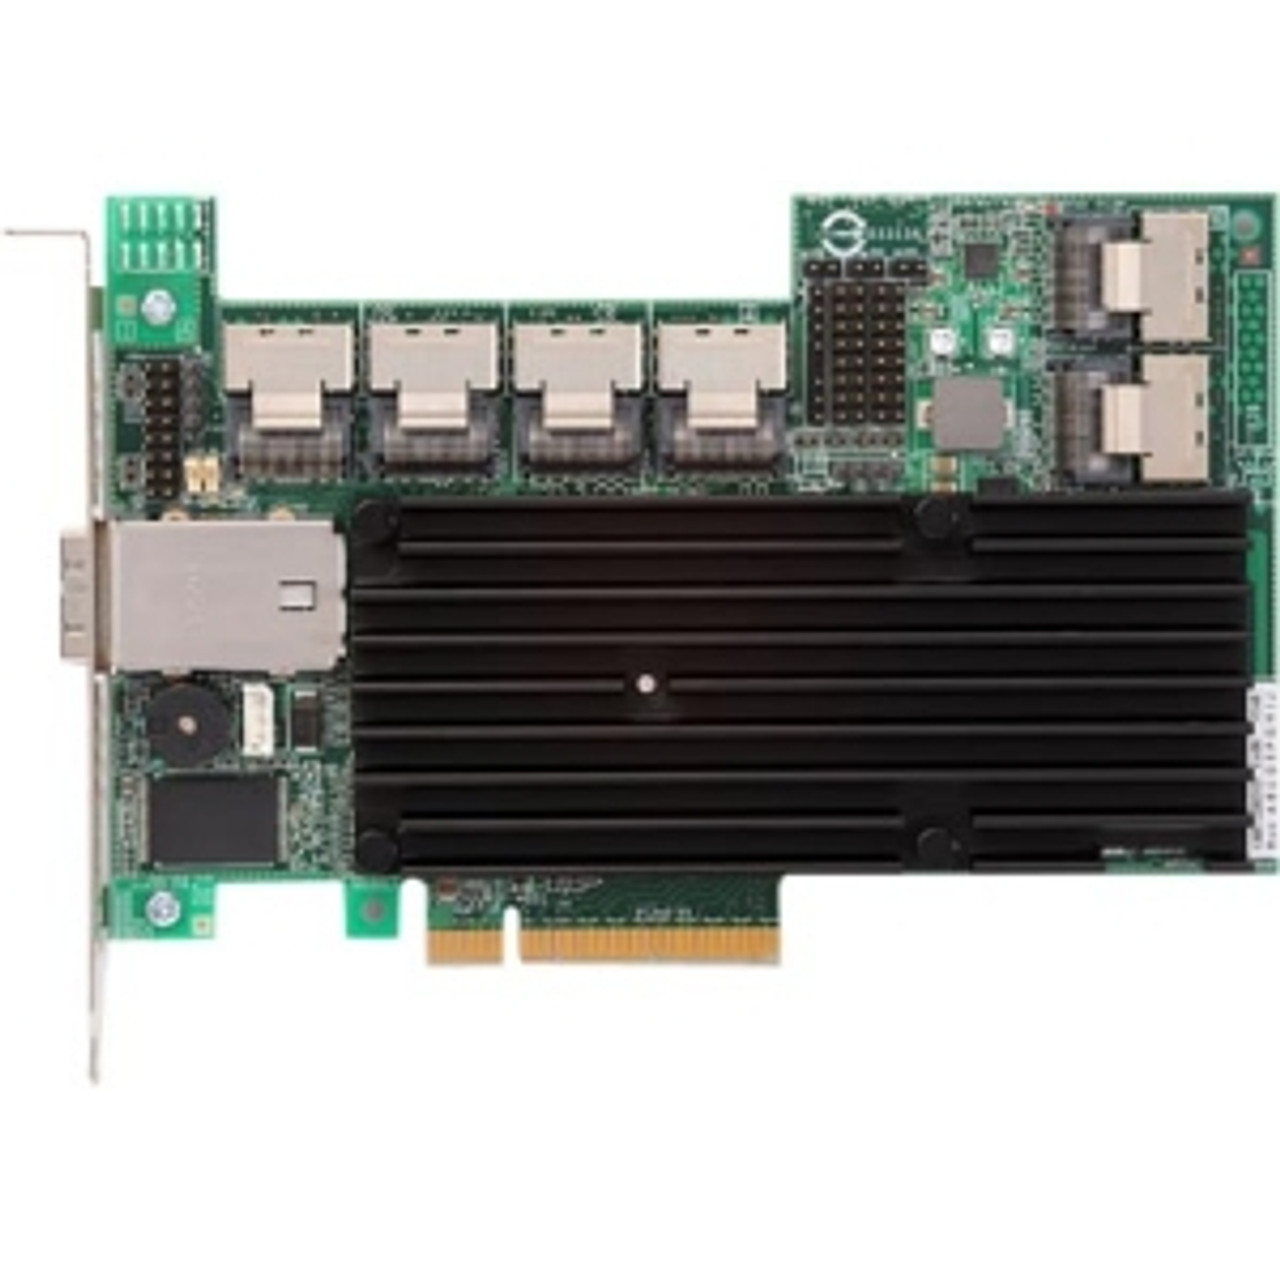 LSI00251 - LSI Logic 3ware 9750-24i4e 28-port SAS RAID Controller - Serial ATA/600 Serial Attached SCSI (SAS) - PCI Express 2.0 x8 - Plug-in Card - RA